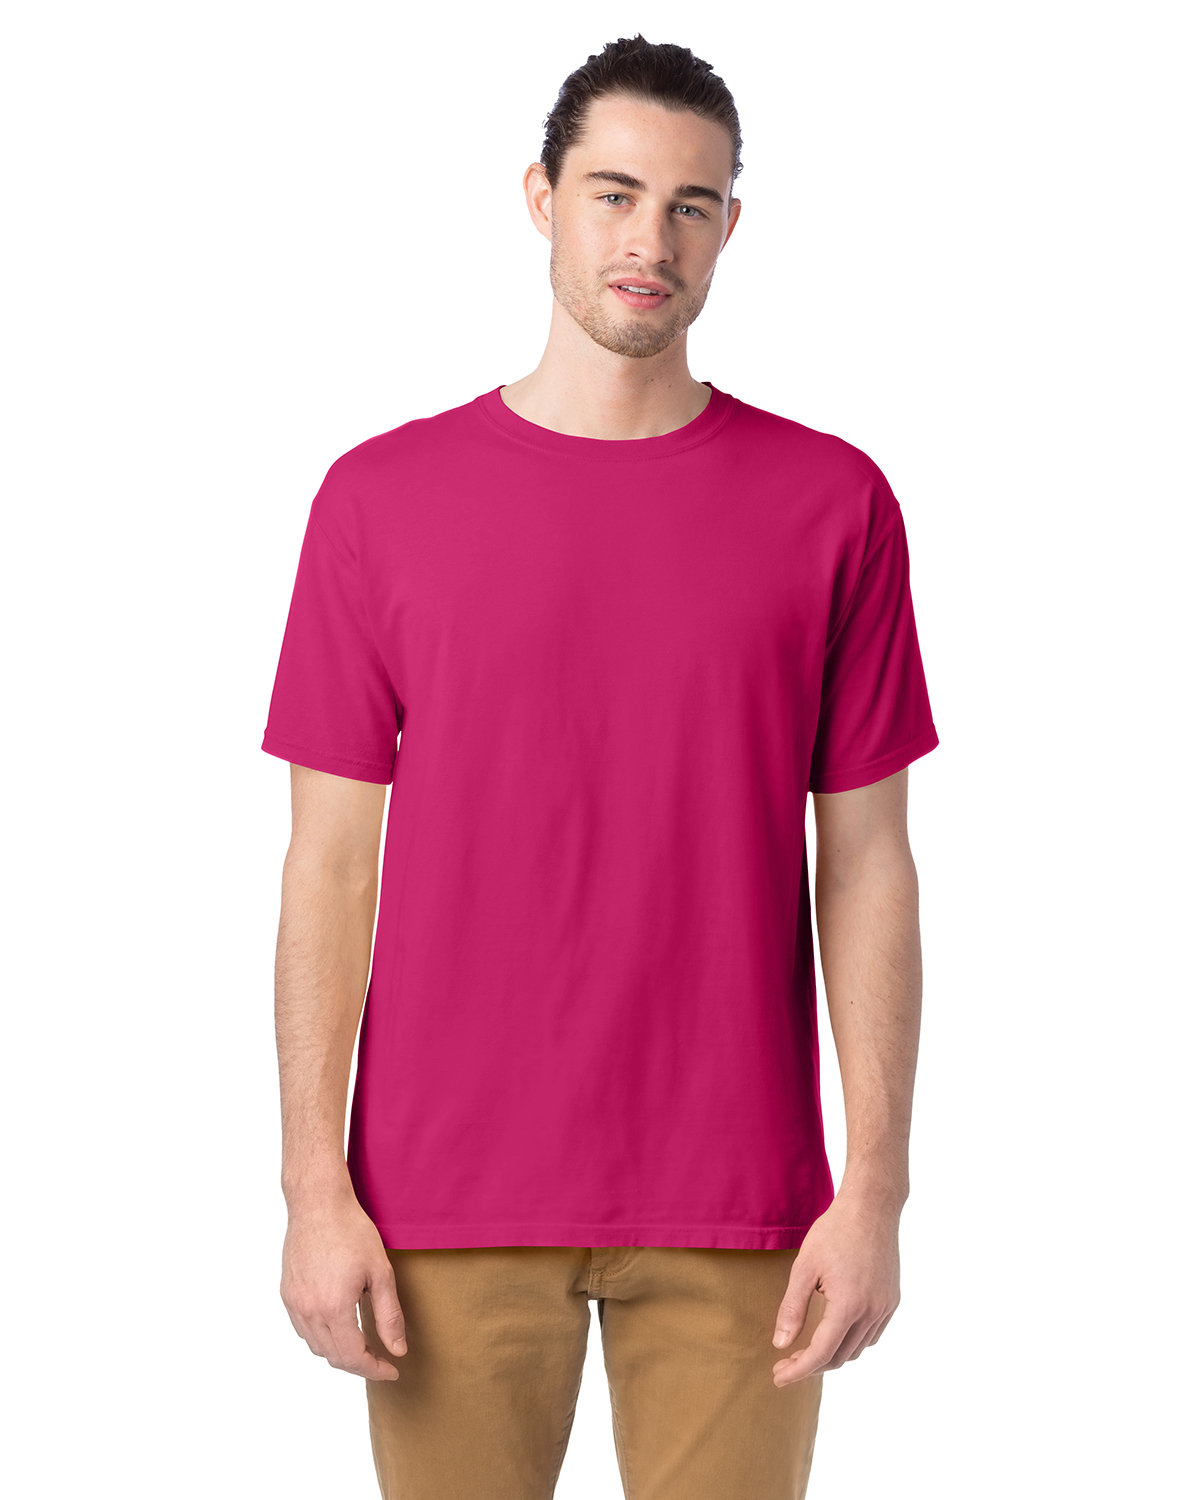 Comfort Colors Men's Adult Tee T-Shirt, Seafoam, Large : .co